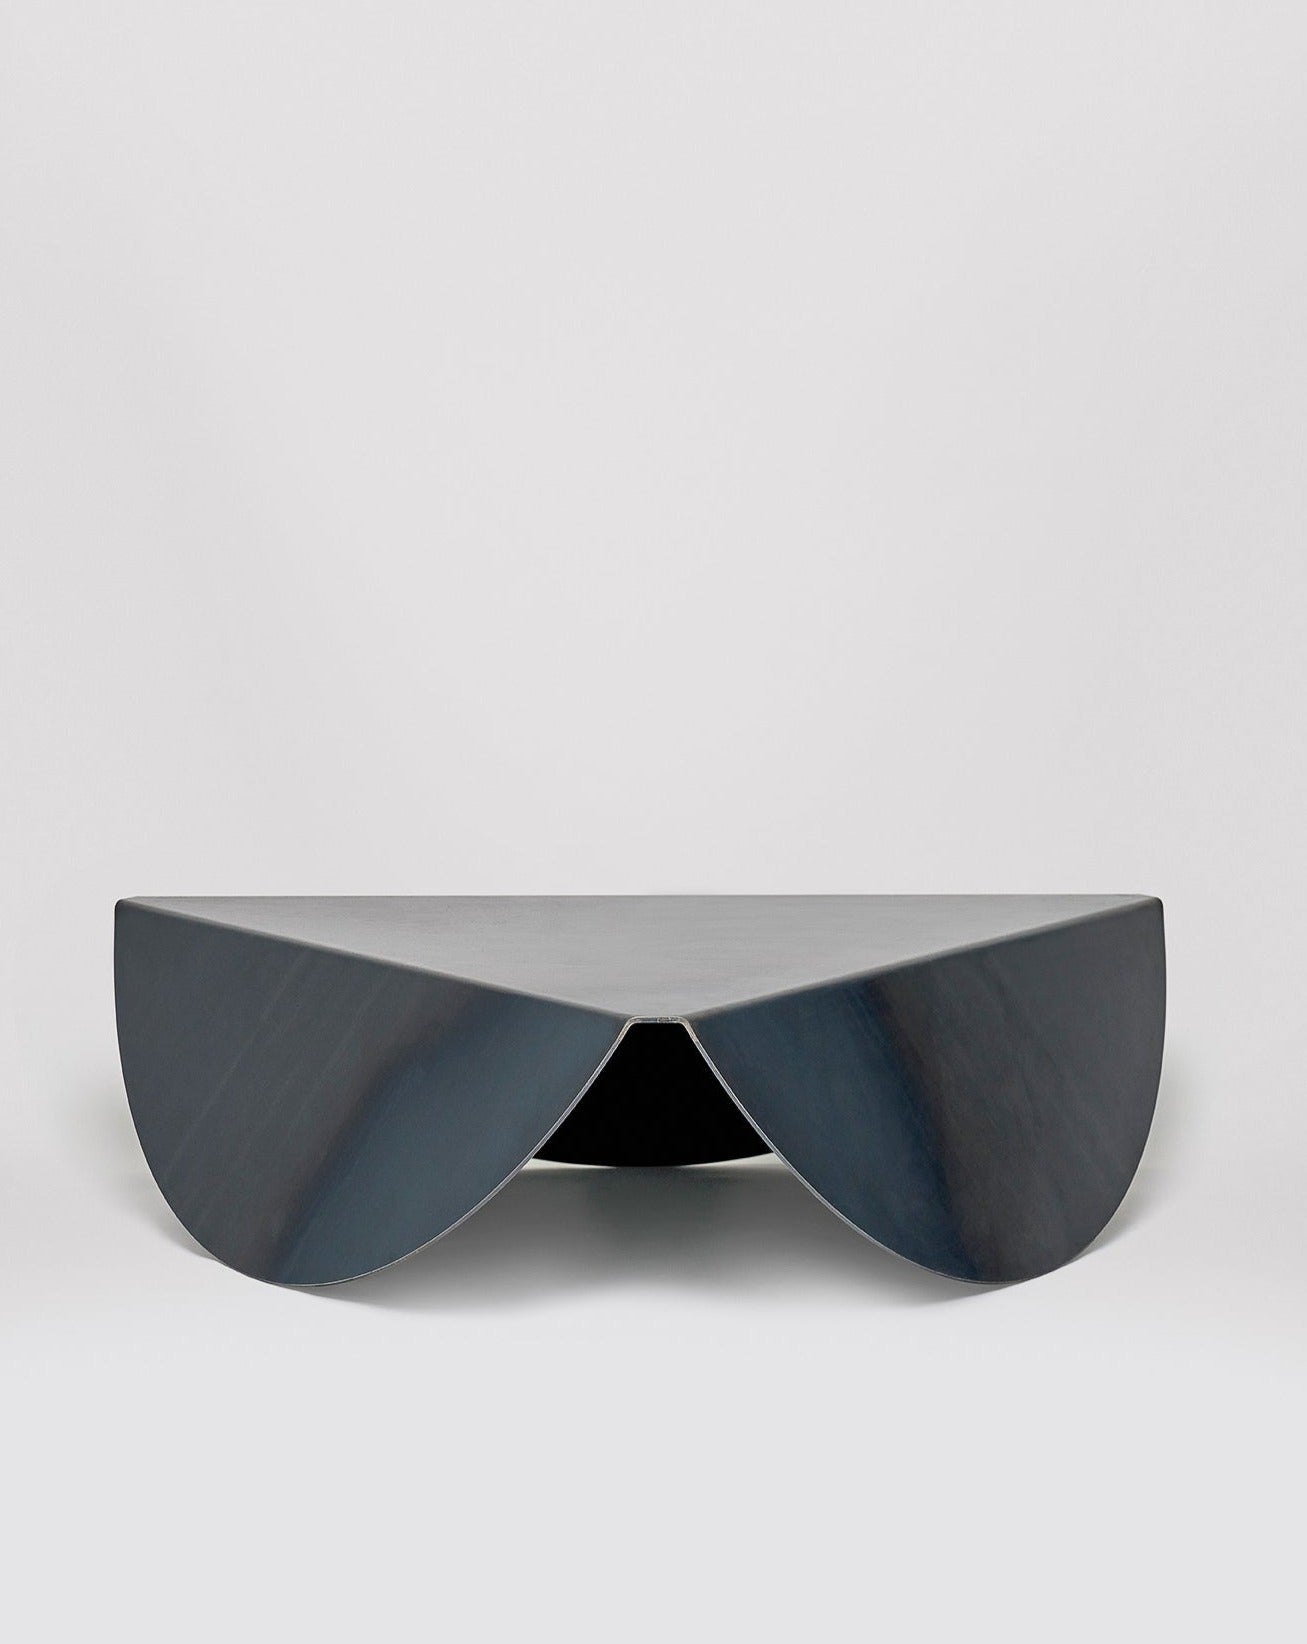 Samosa Table in Steel - kombi